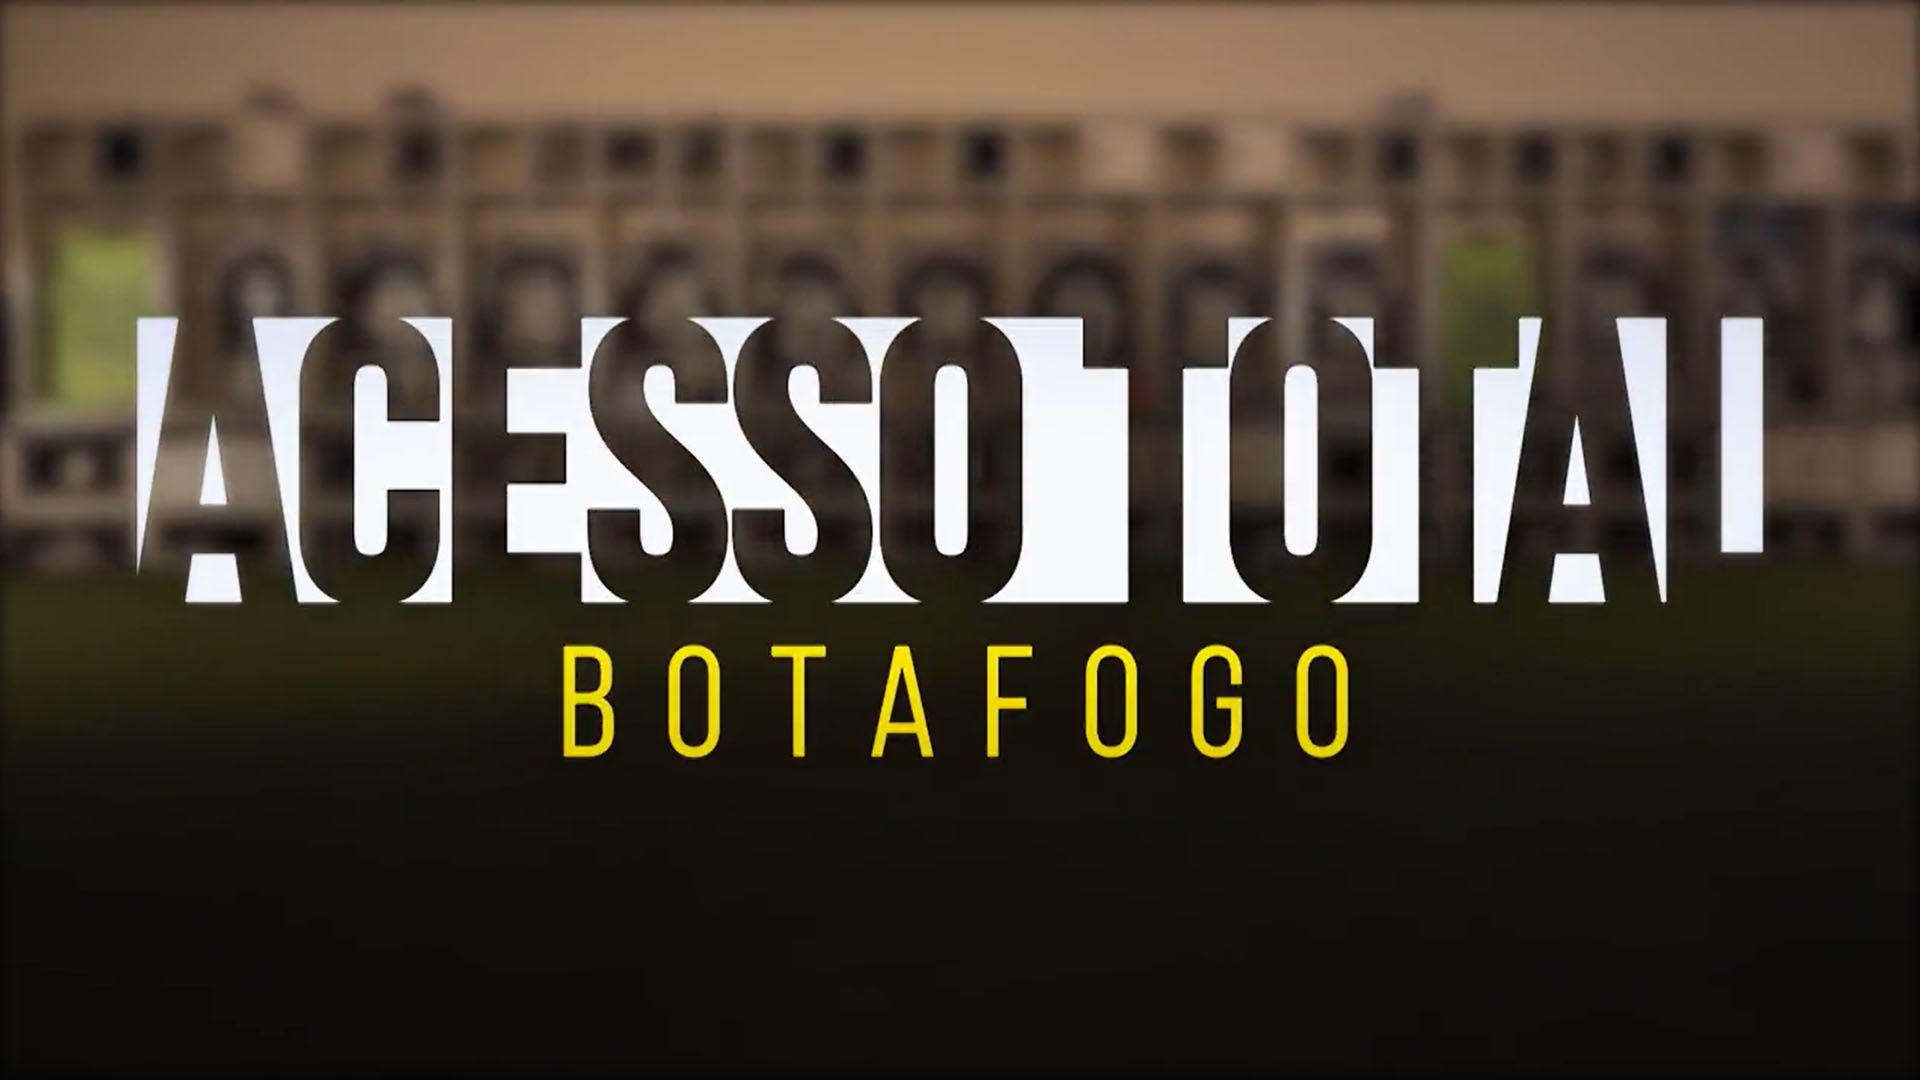 Acesso Total: Botafogo (TV Series 2021– ) - IMDb